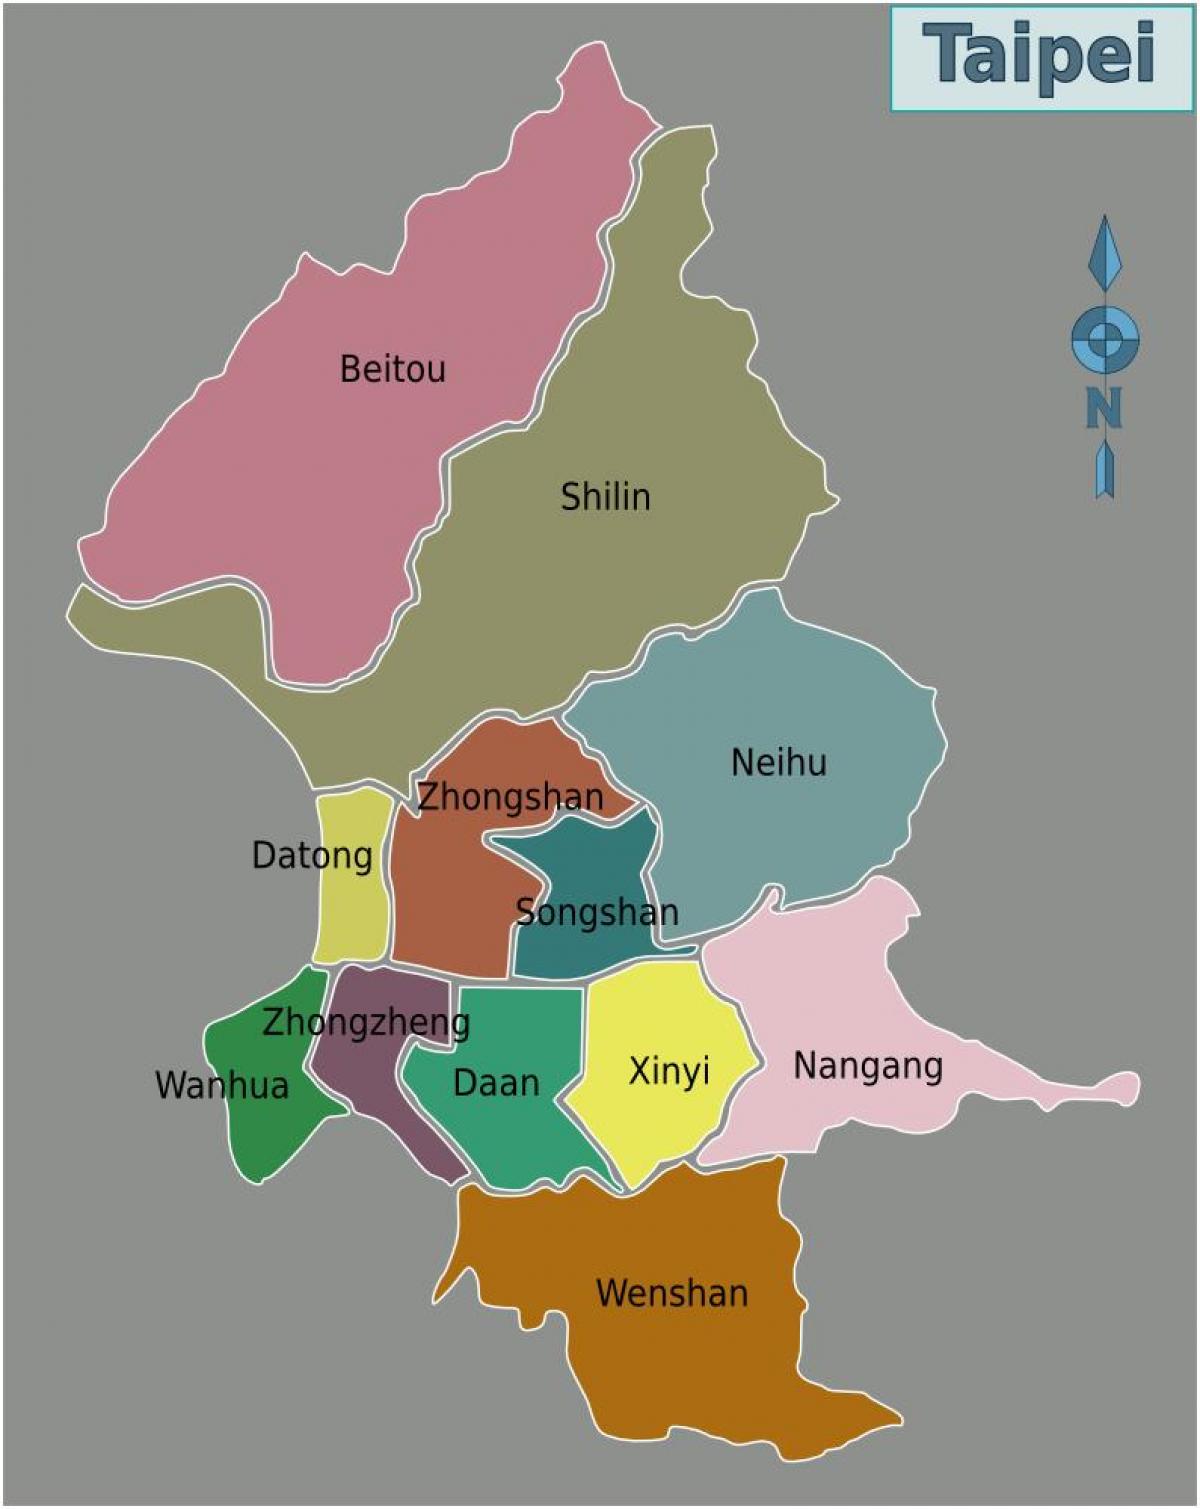 Taipei city област на мапата